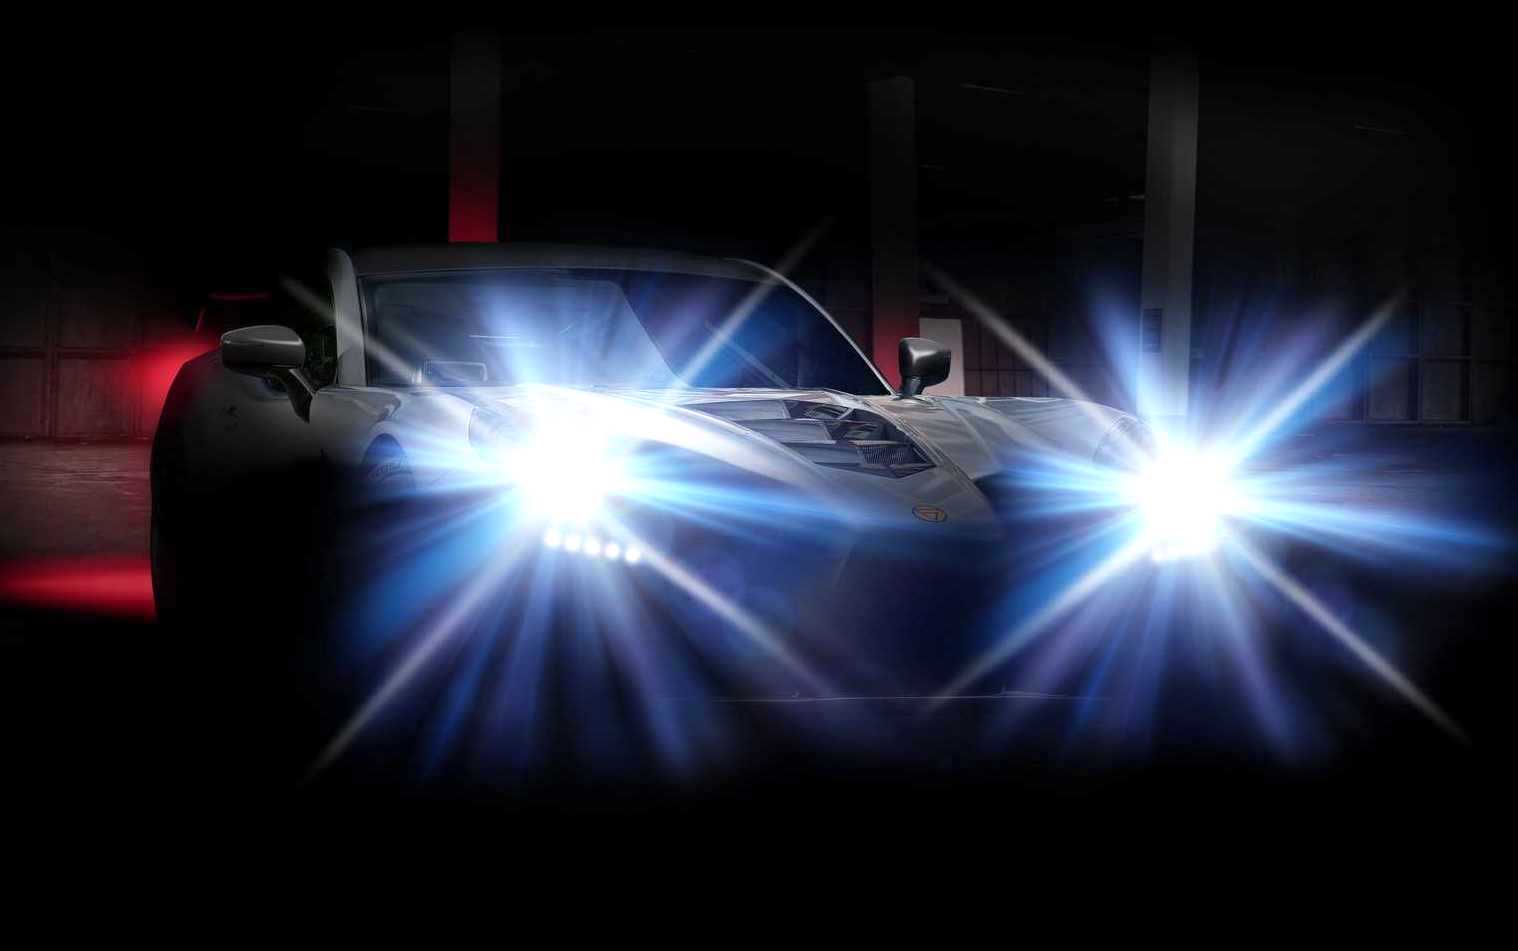 Ginetta planning all-new carbon fibre supercar, 600hp V8